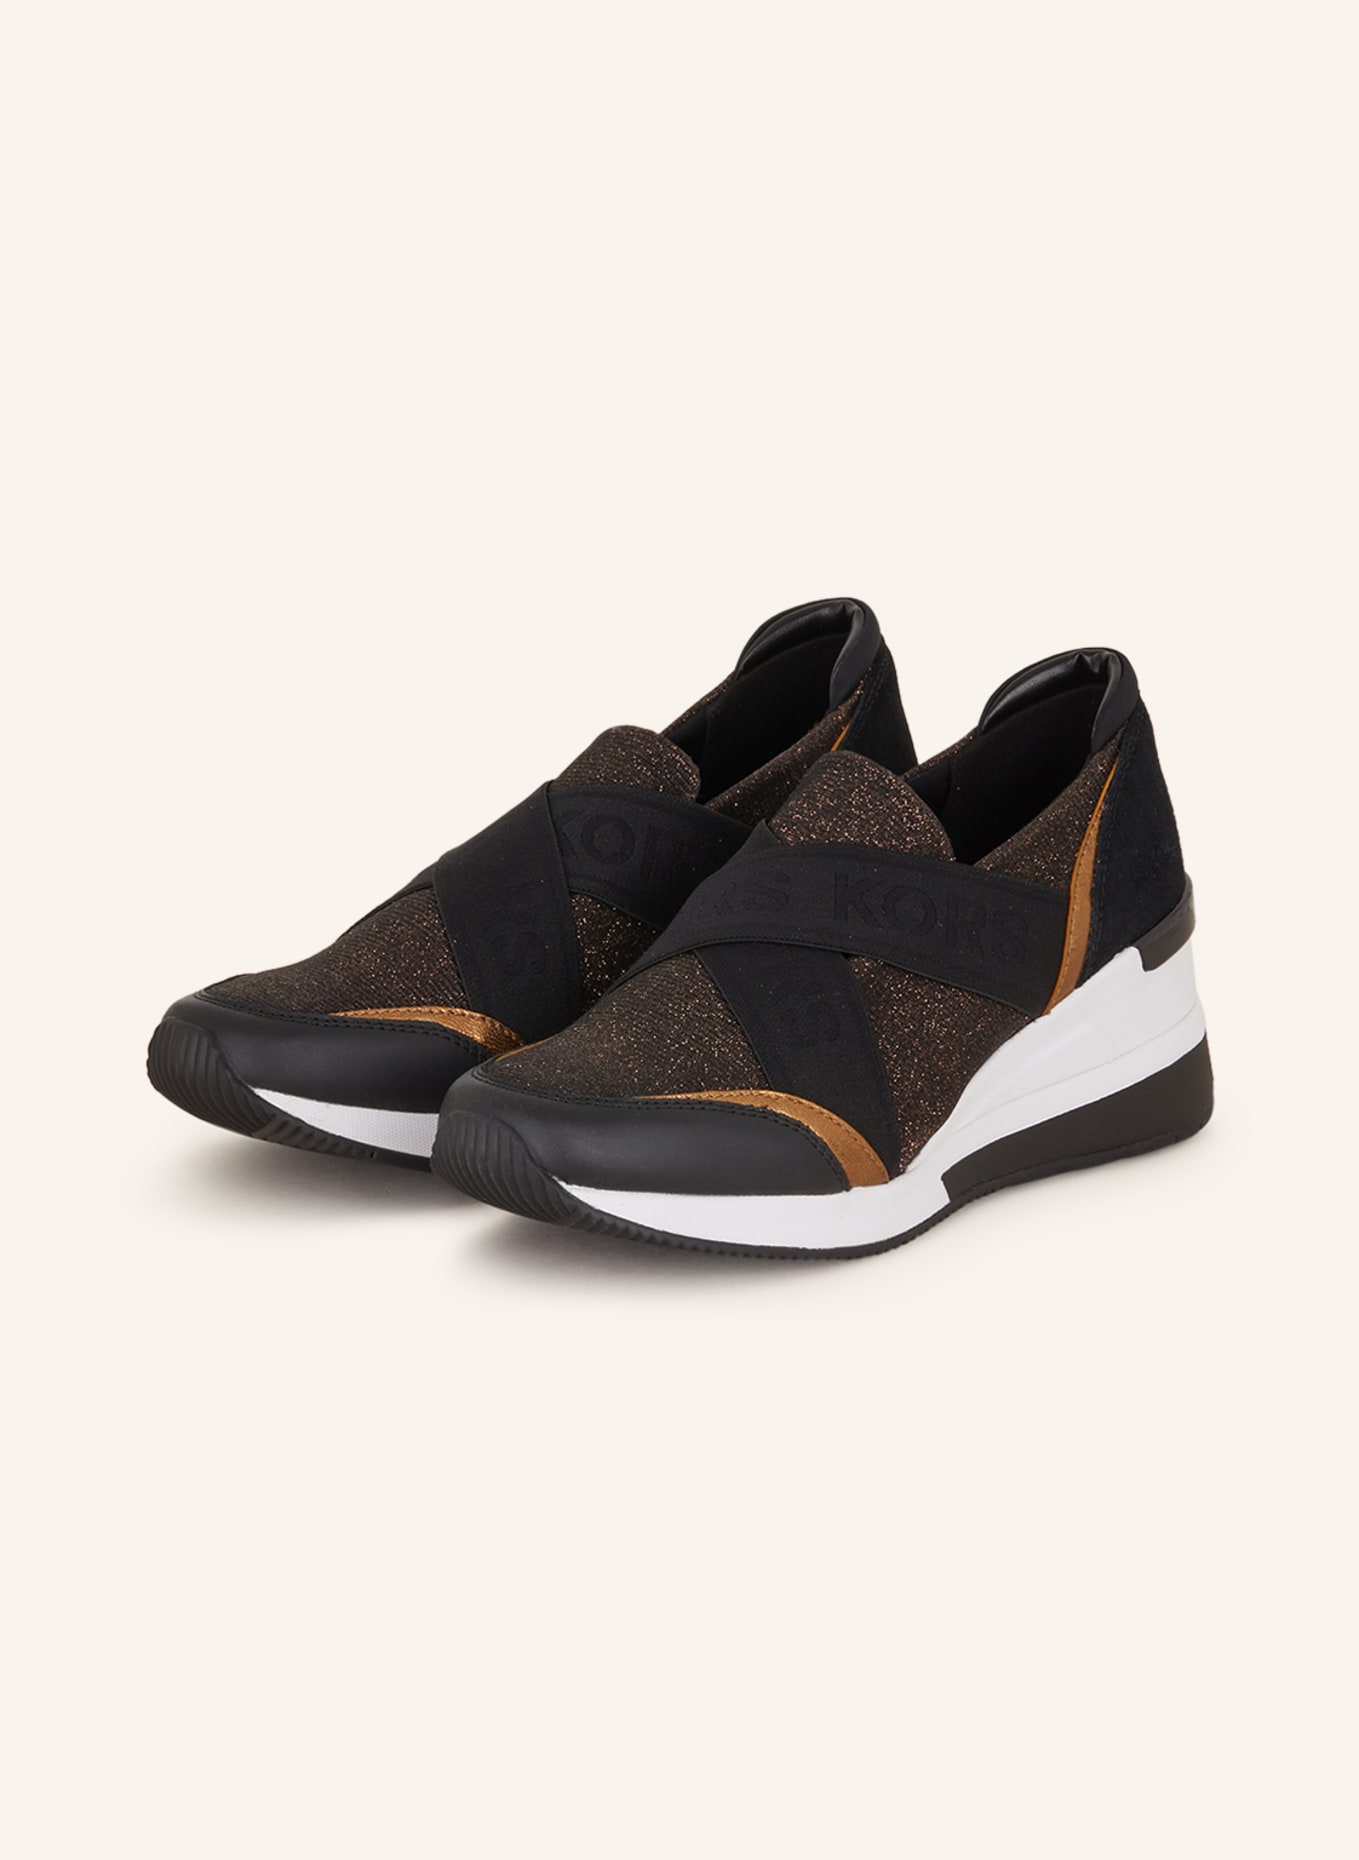 MICHAEL KORS Slip-on-Sneaker GEENA mit Glitzergarn, Farbe: 080 Black/Bronze (Bild 1)